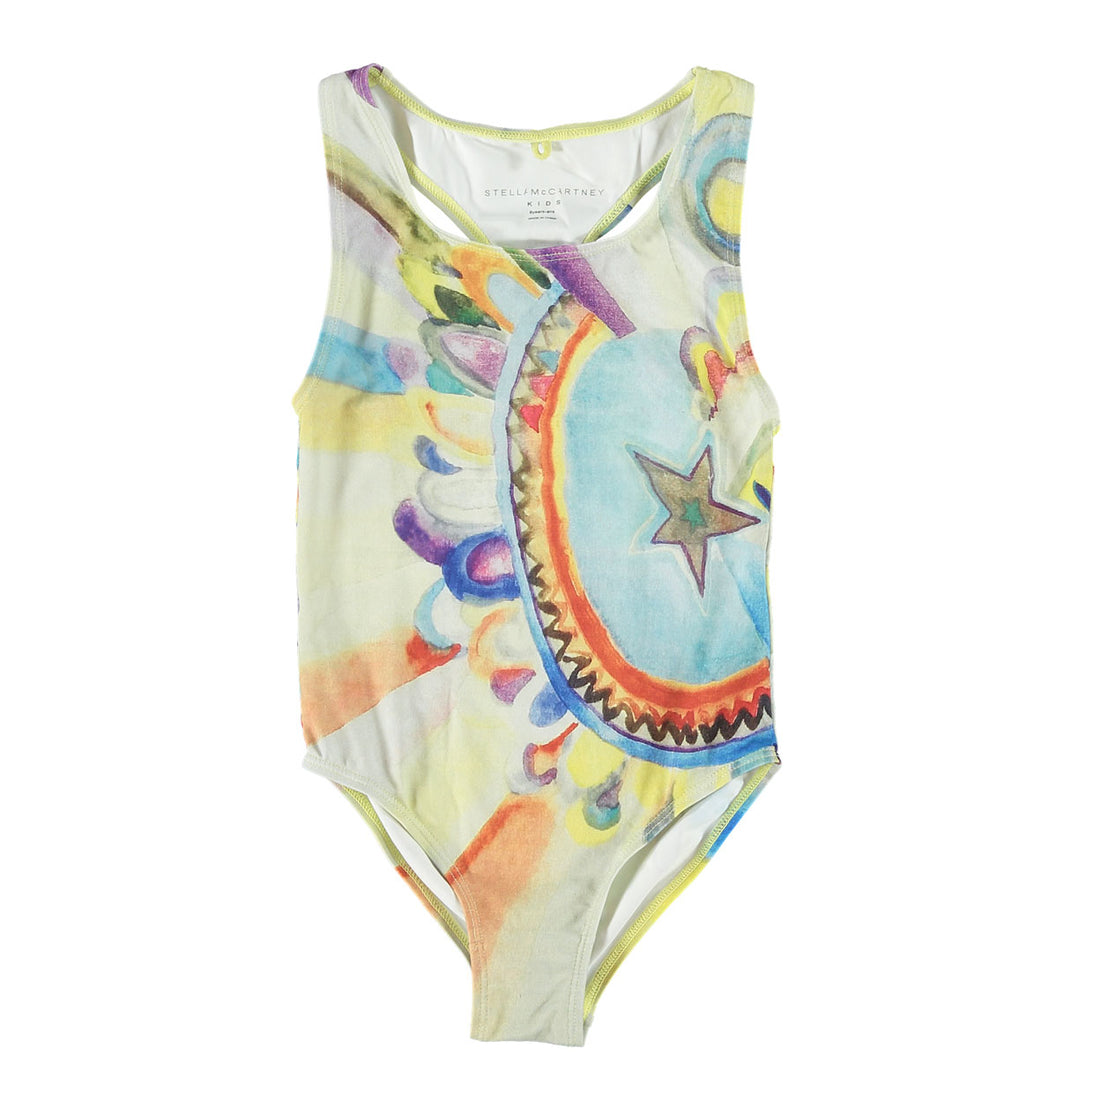 Stella McCartney Watercolor Print Marcie Swimsuit